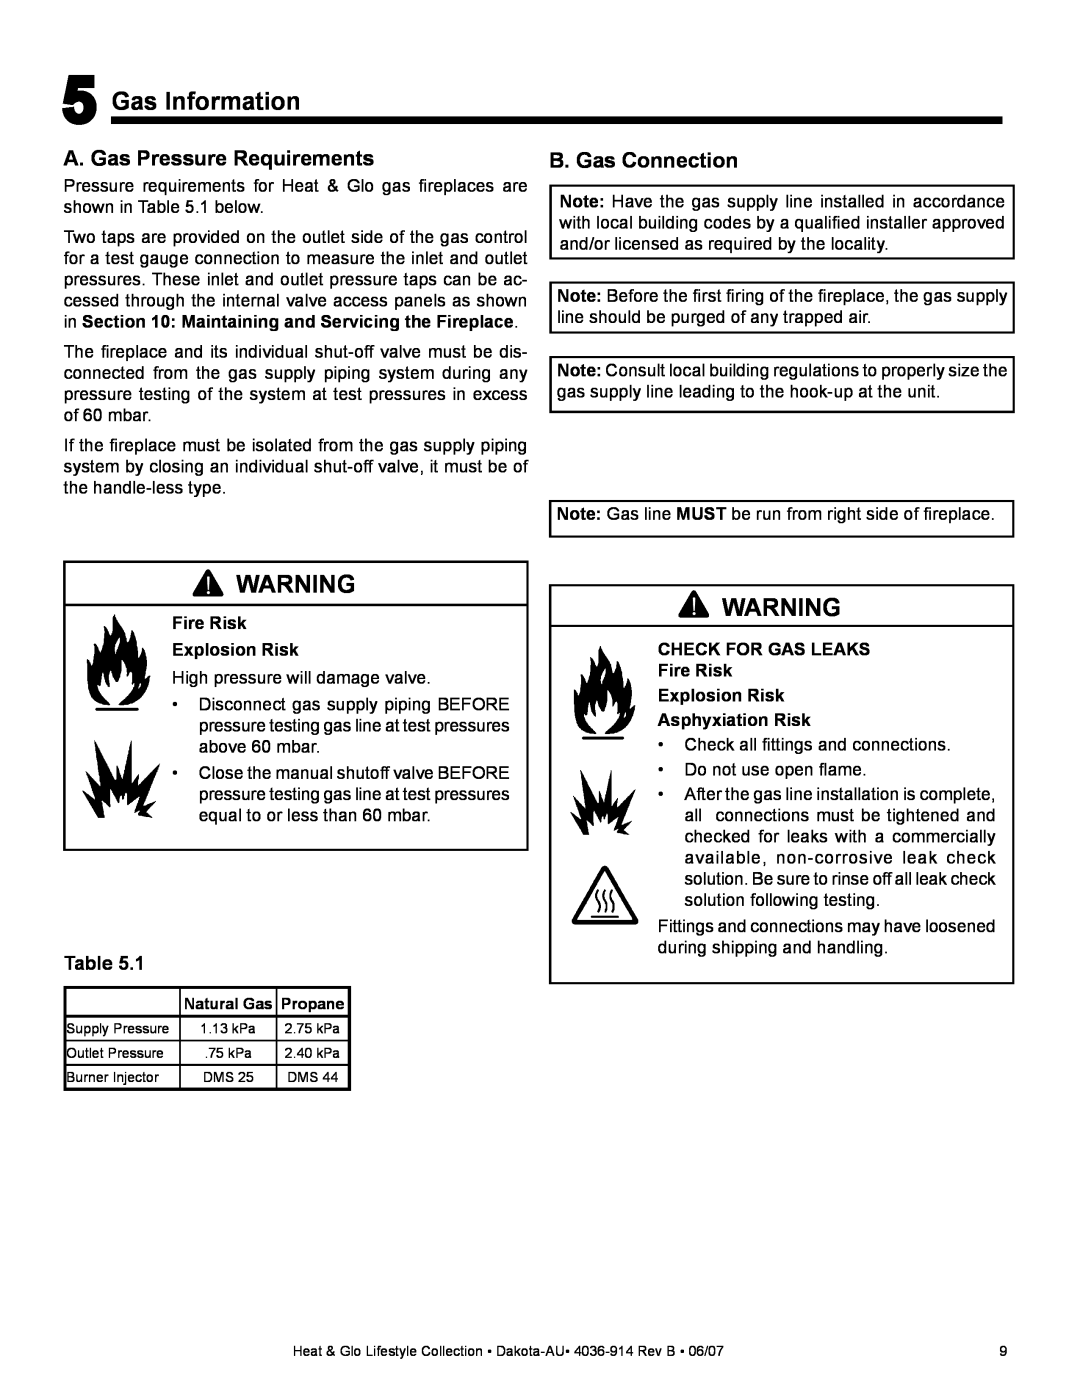 Heat & Glo LifeStyle DAKOTA-AU manual Gas Information, A. Gas Pressure Requirements, B. Gas Connection 